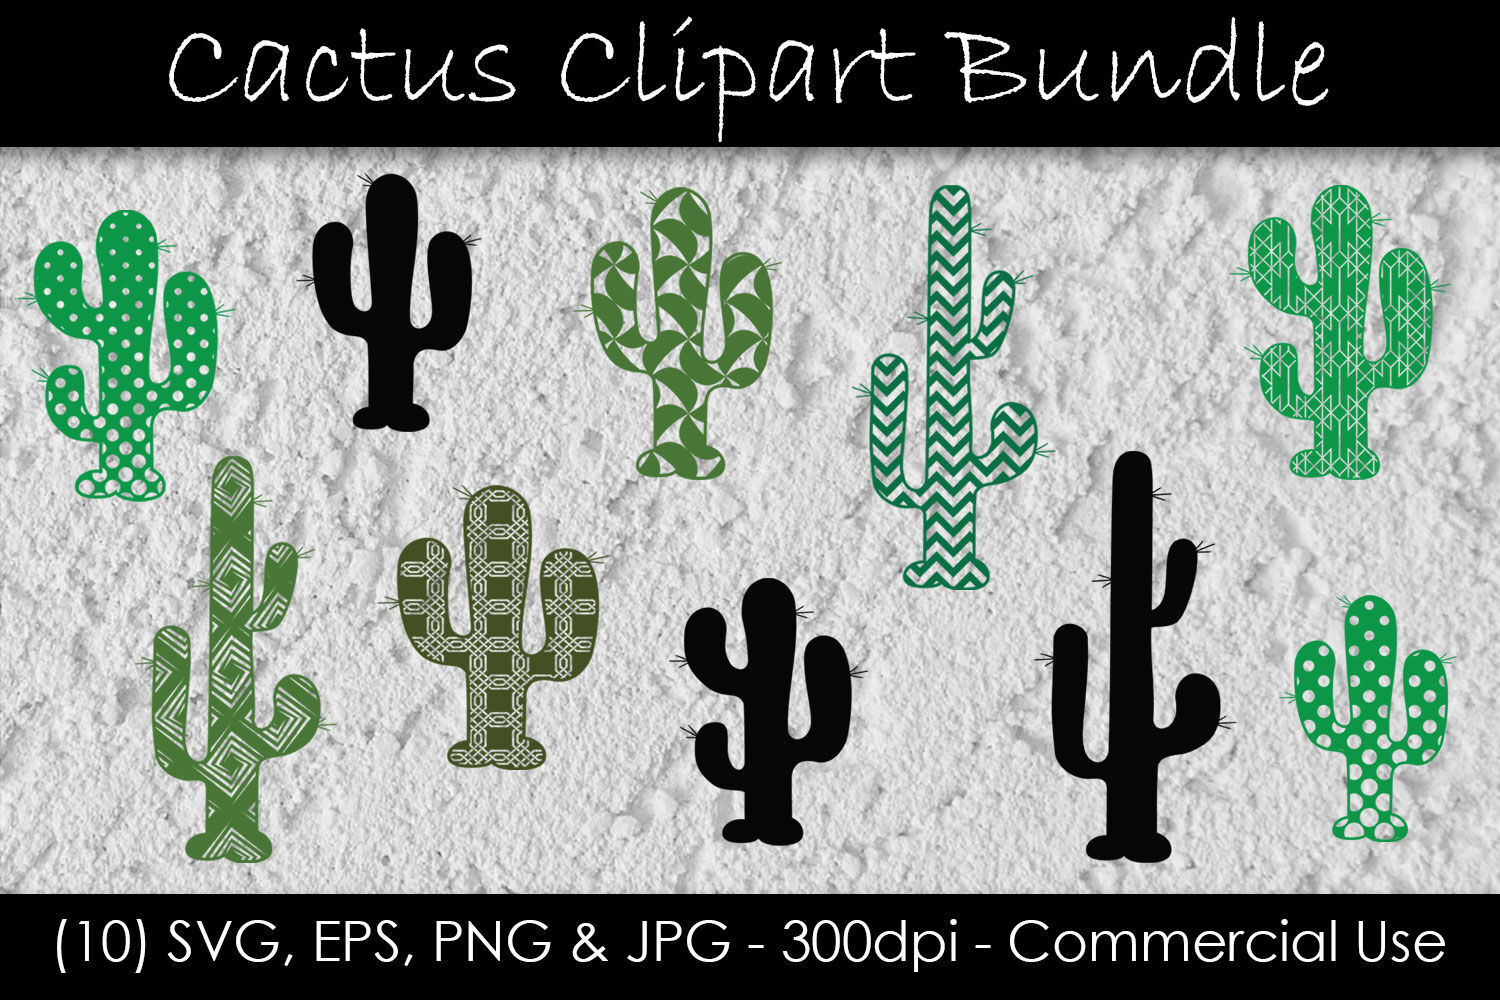 ori 3635287 2xro1l3nwniislb0cgz3j0xz4r3ikwazjguzoxep cactus svg bundle cactus clip art cactus silhouette